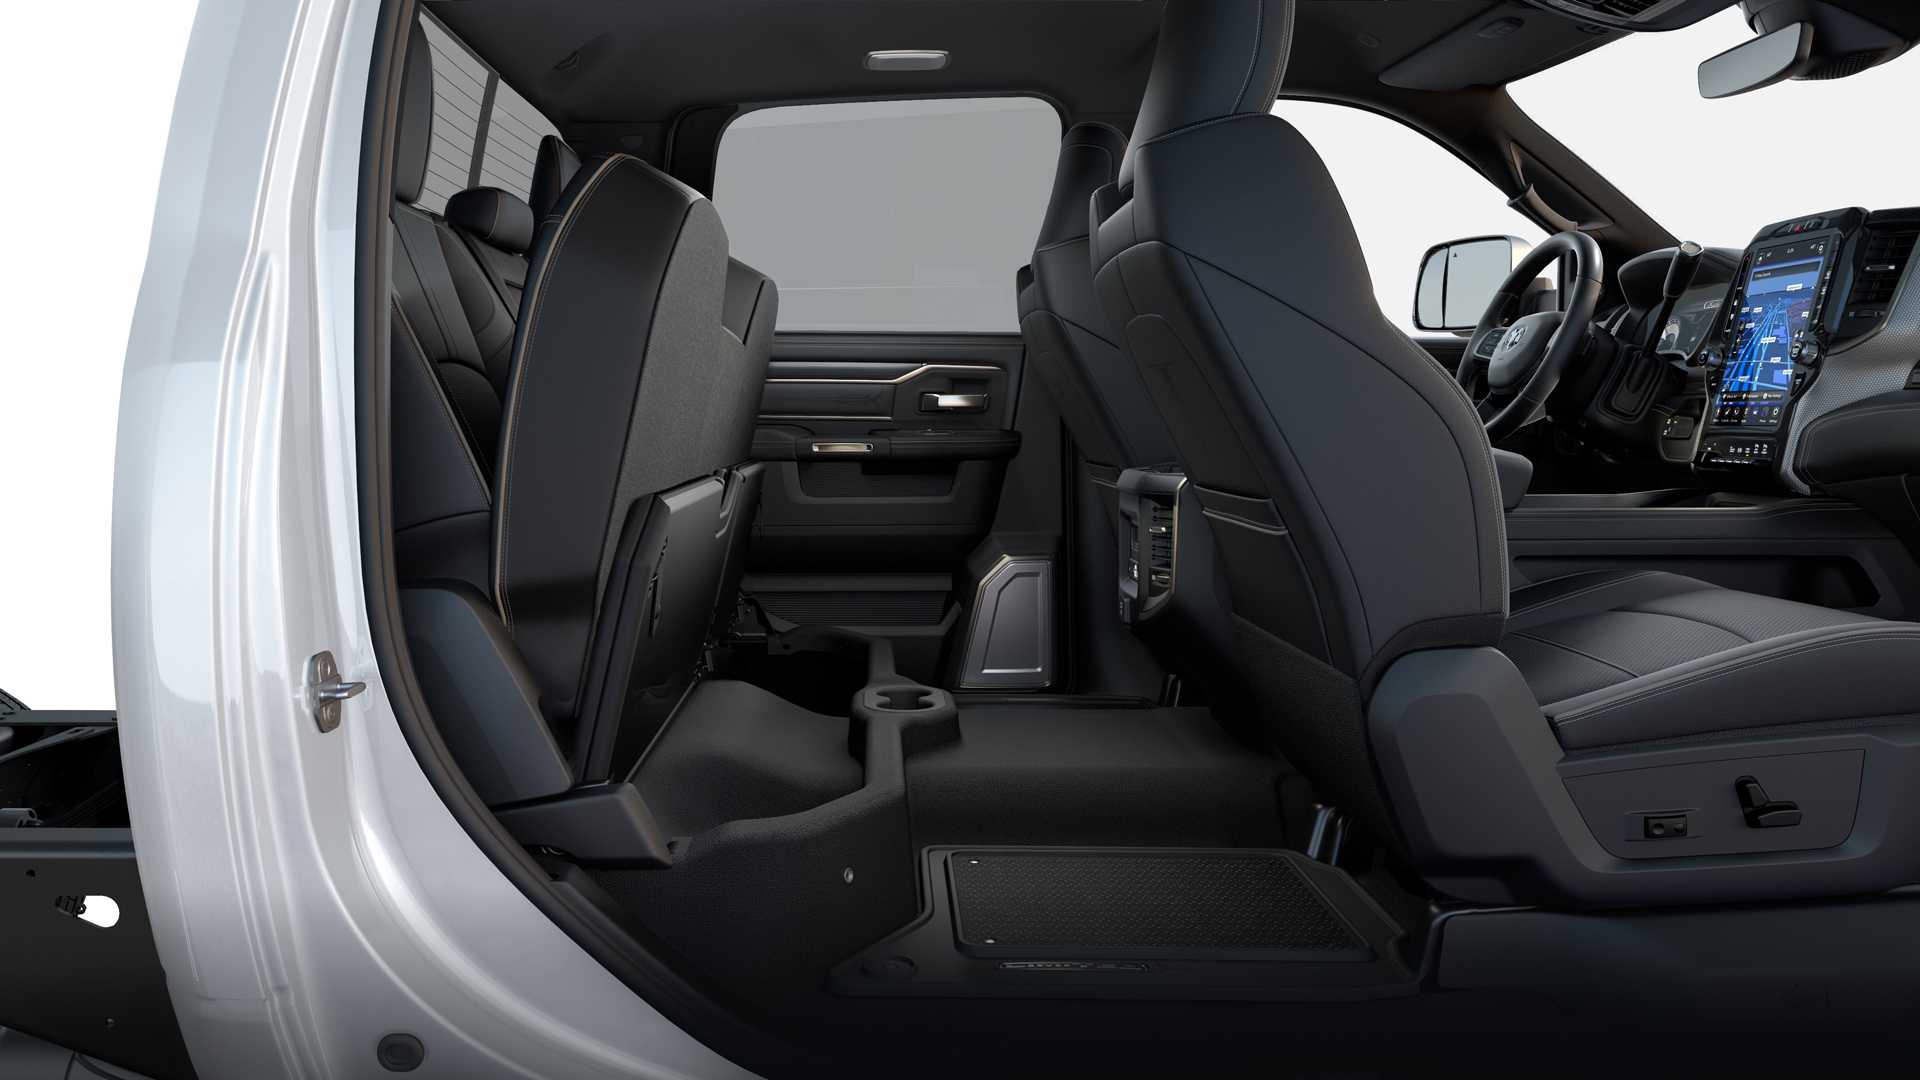 2019-ram-chassis-cab-interior (10)